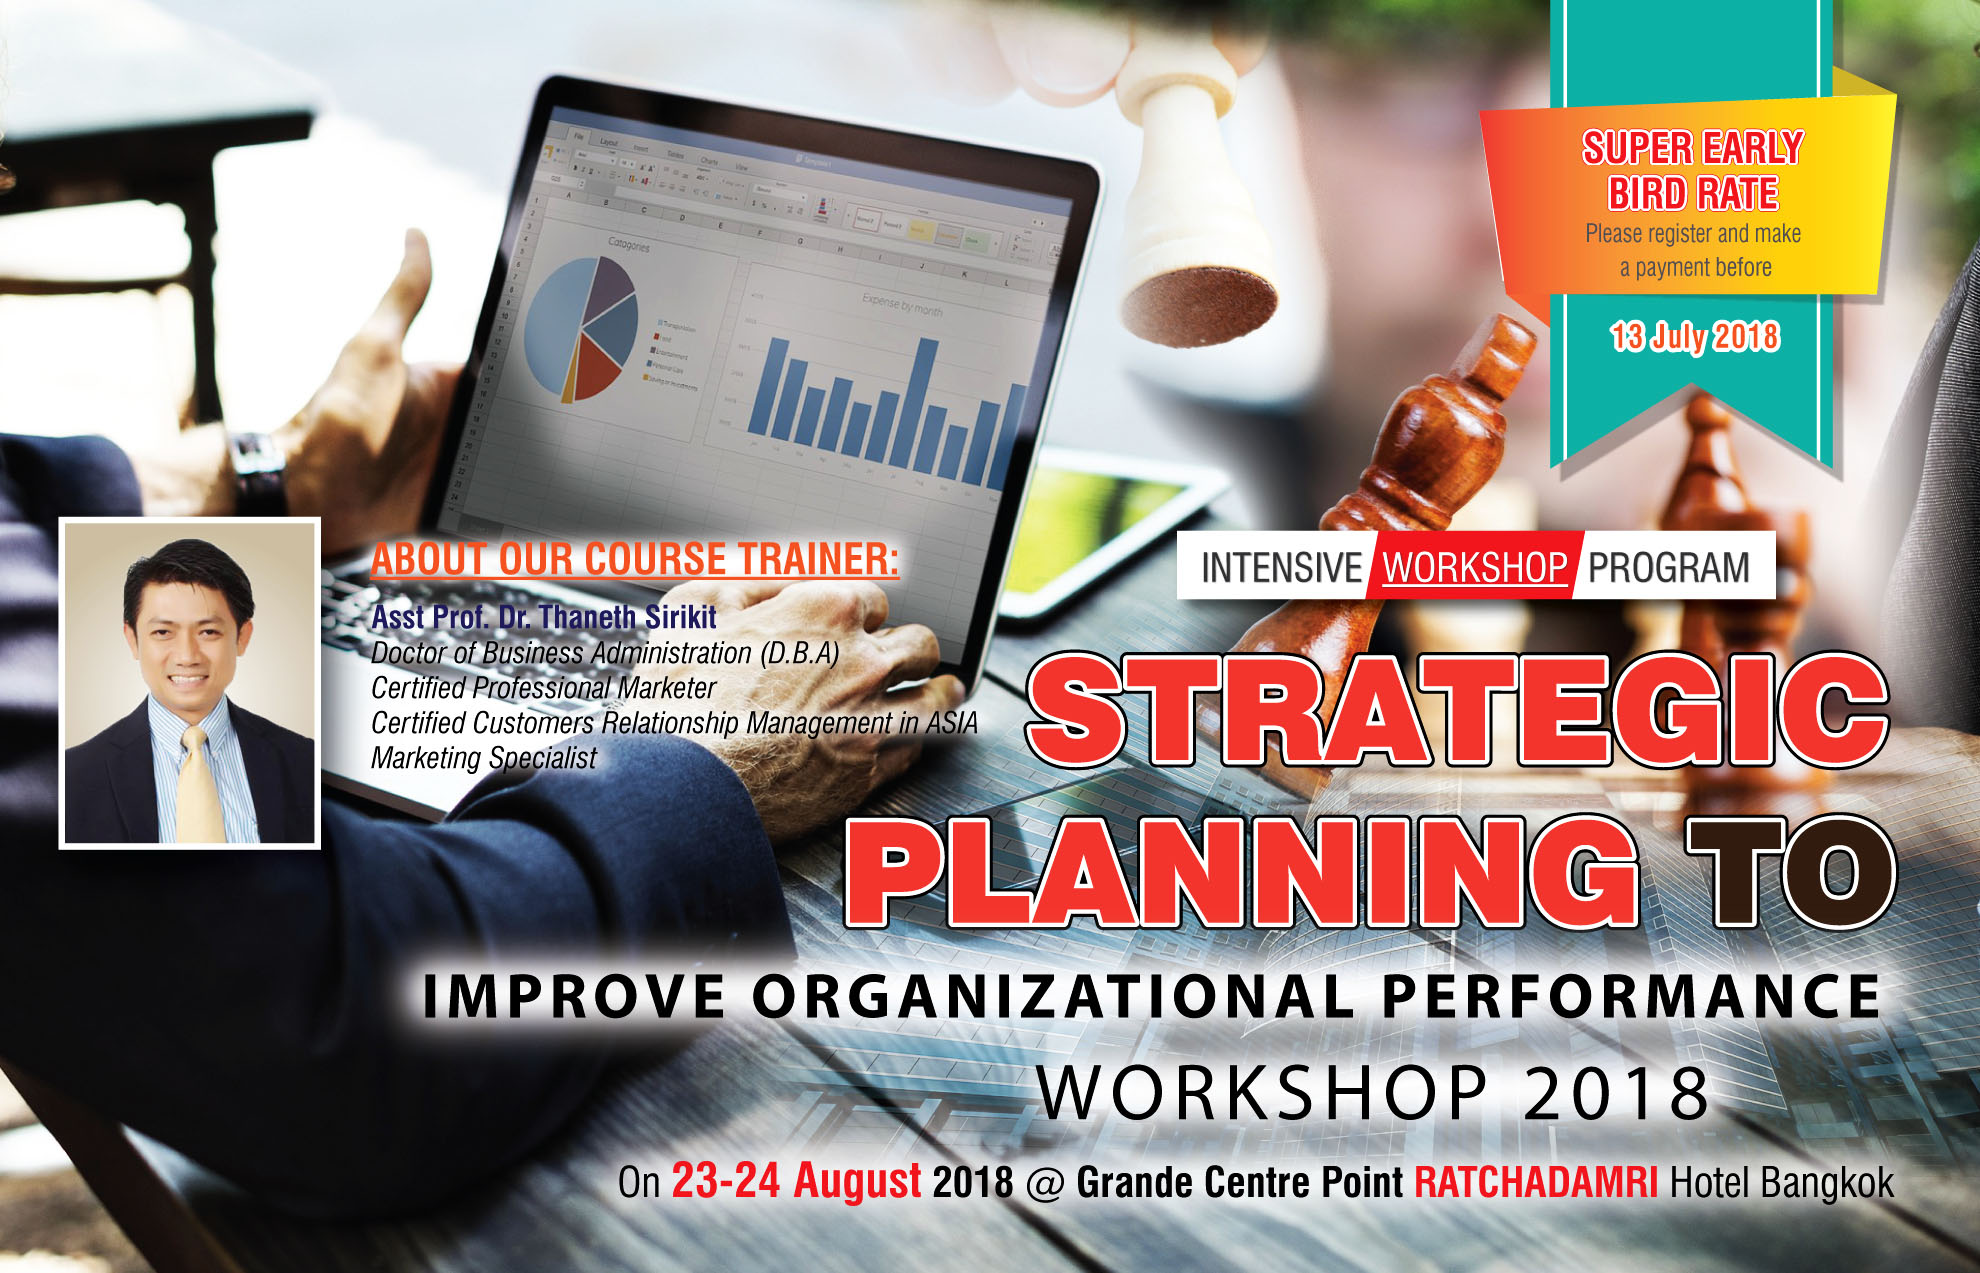 Strategic Planning to Improve Organizational Performance Workshop 2018